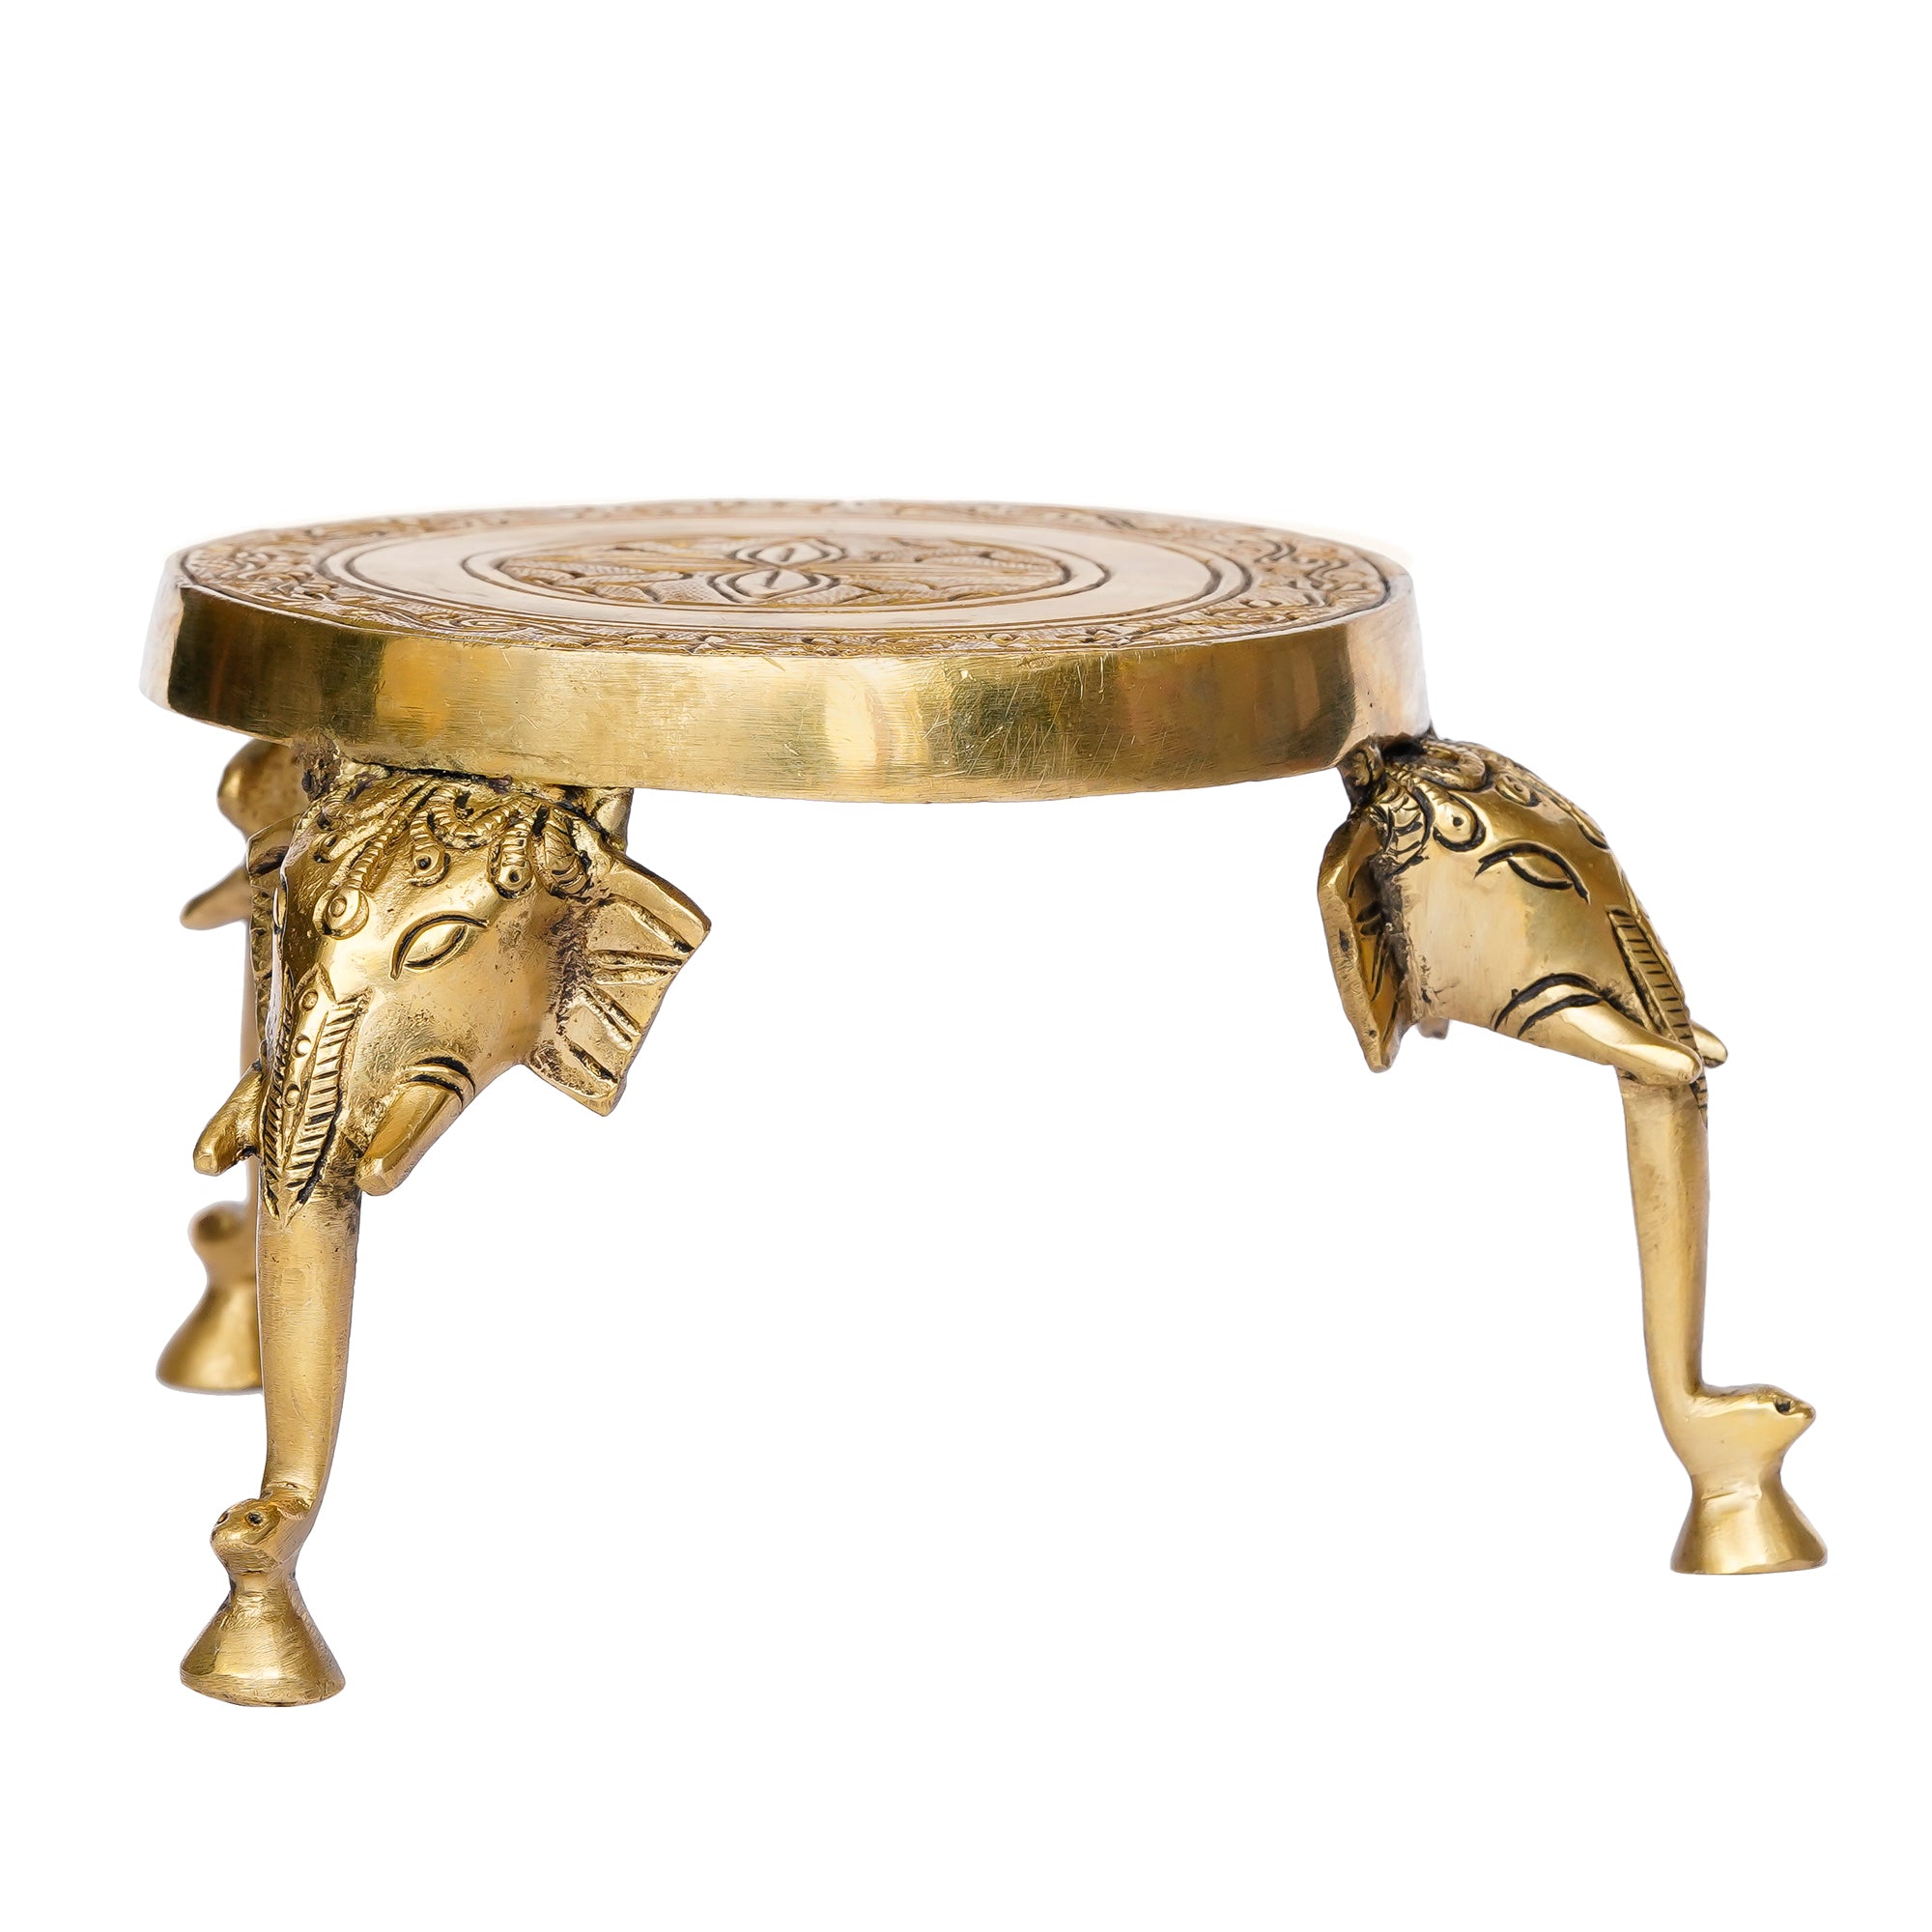 Decorative Brass Stool With Elephant Design Legs 6